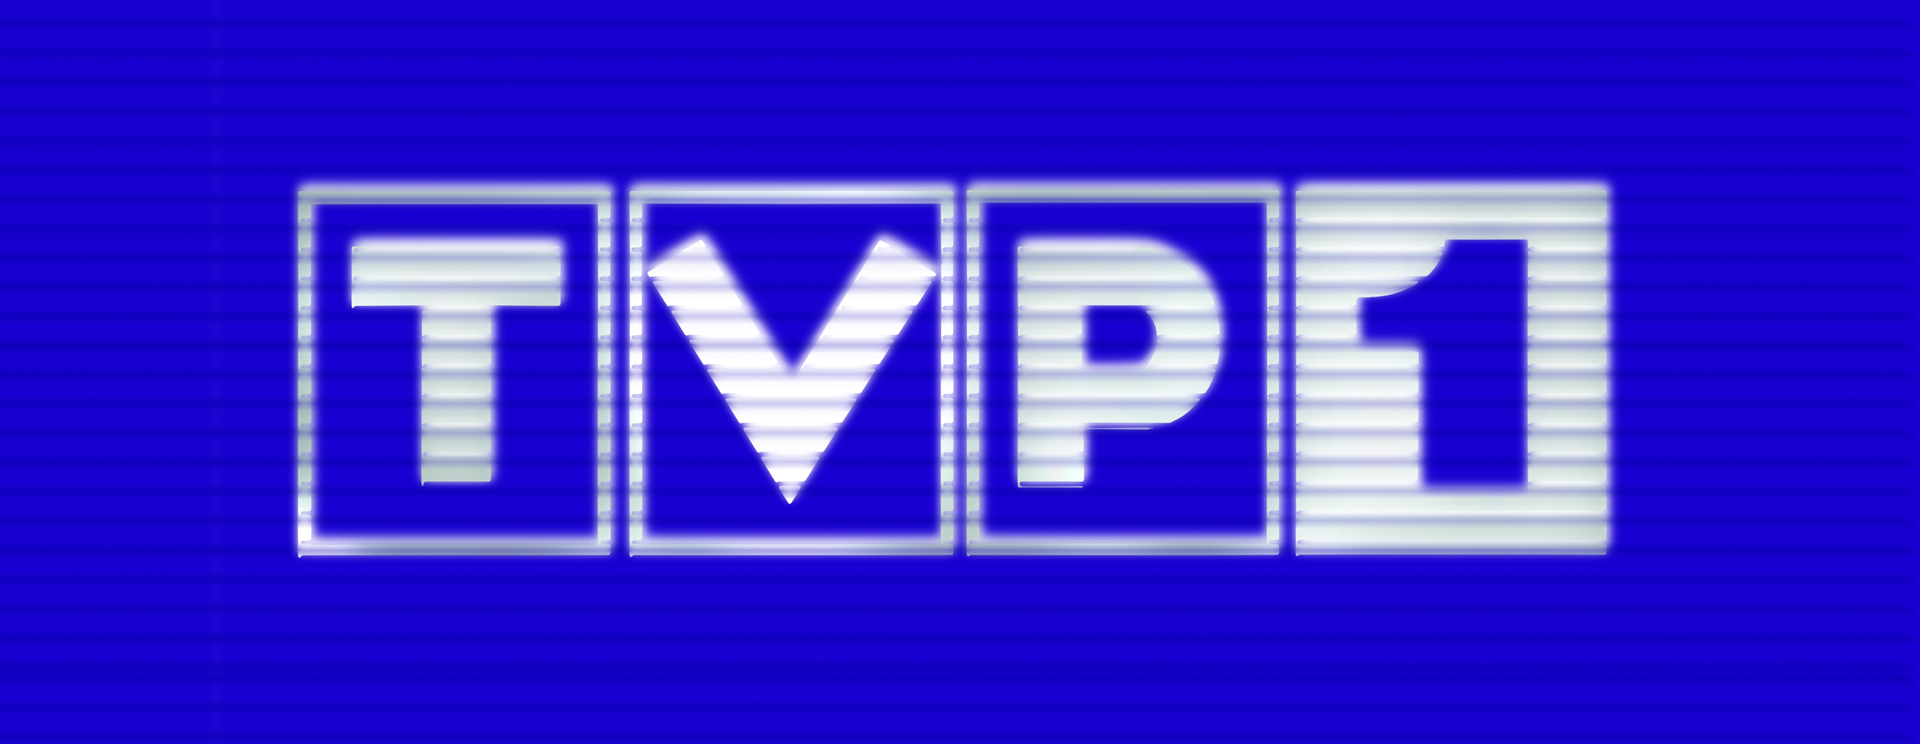 Logo TVP1